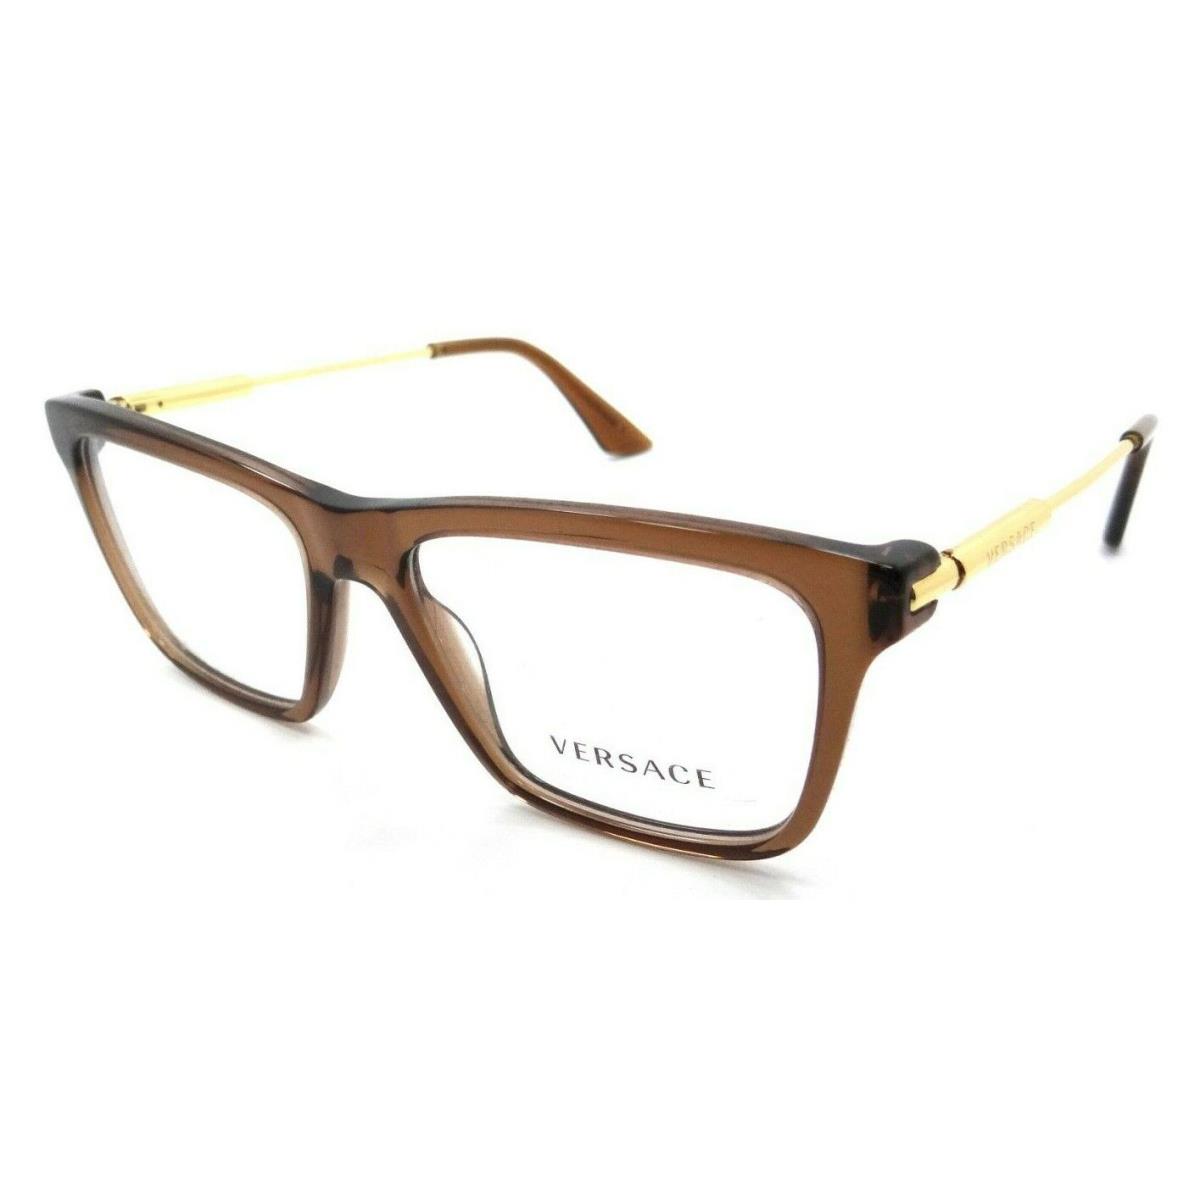 Versace Eyeglasses Frames VE 3308 5028 53-17-145 Transparent Brown Made in Italy